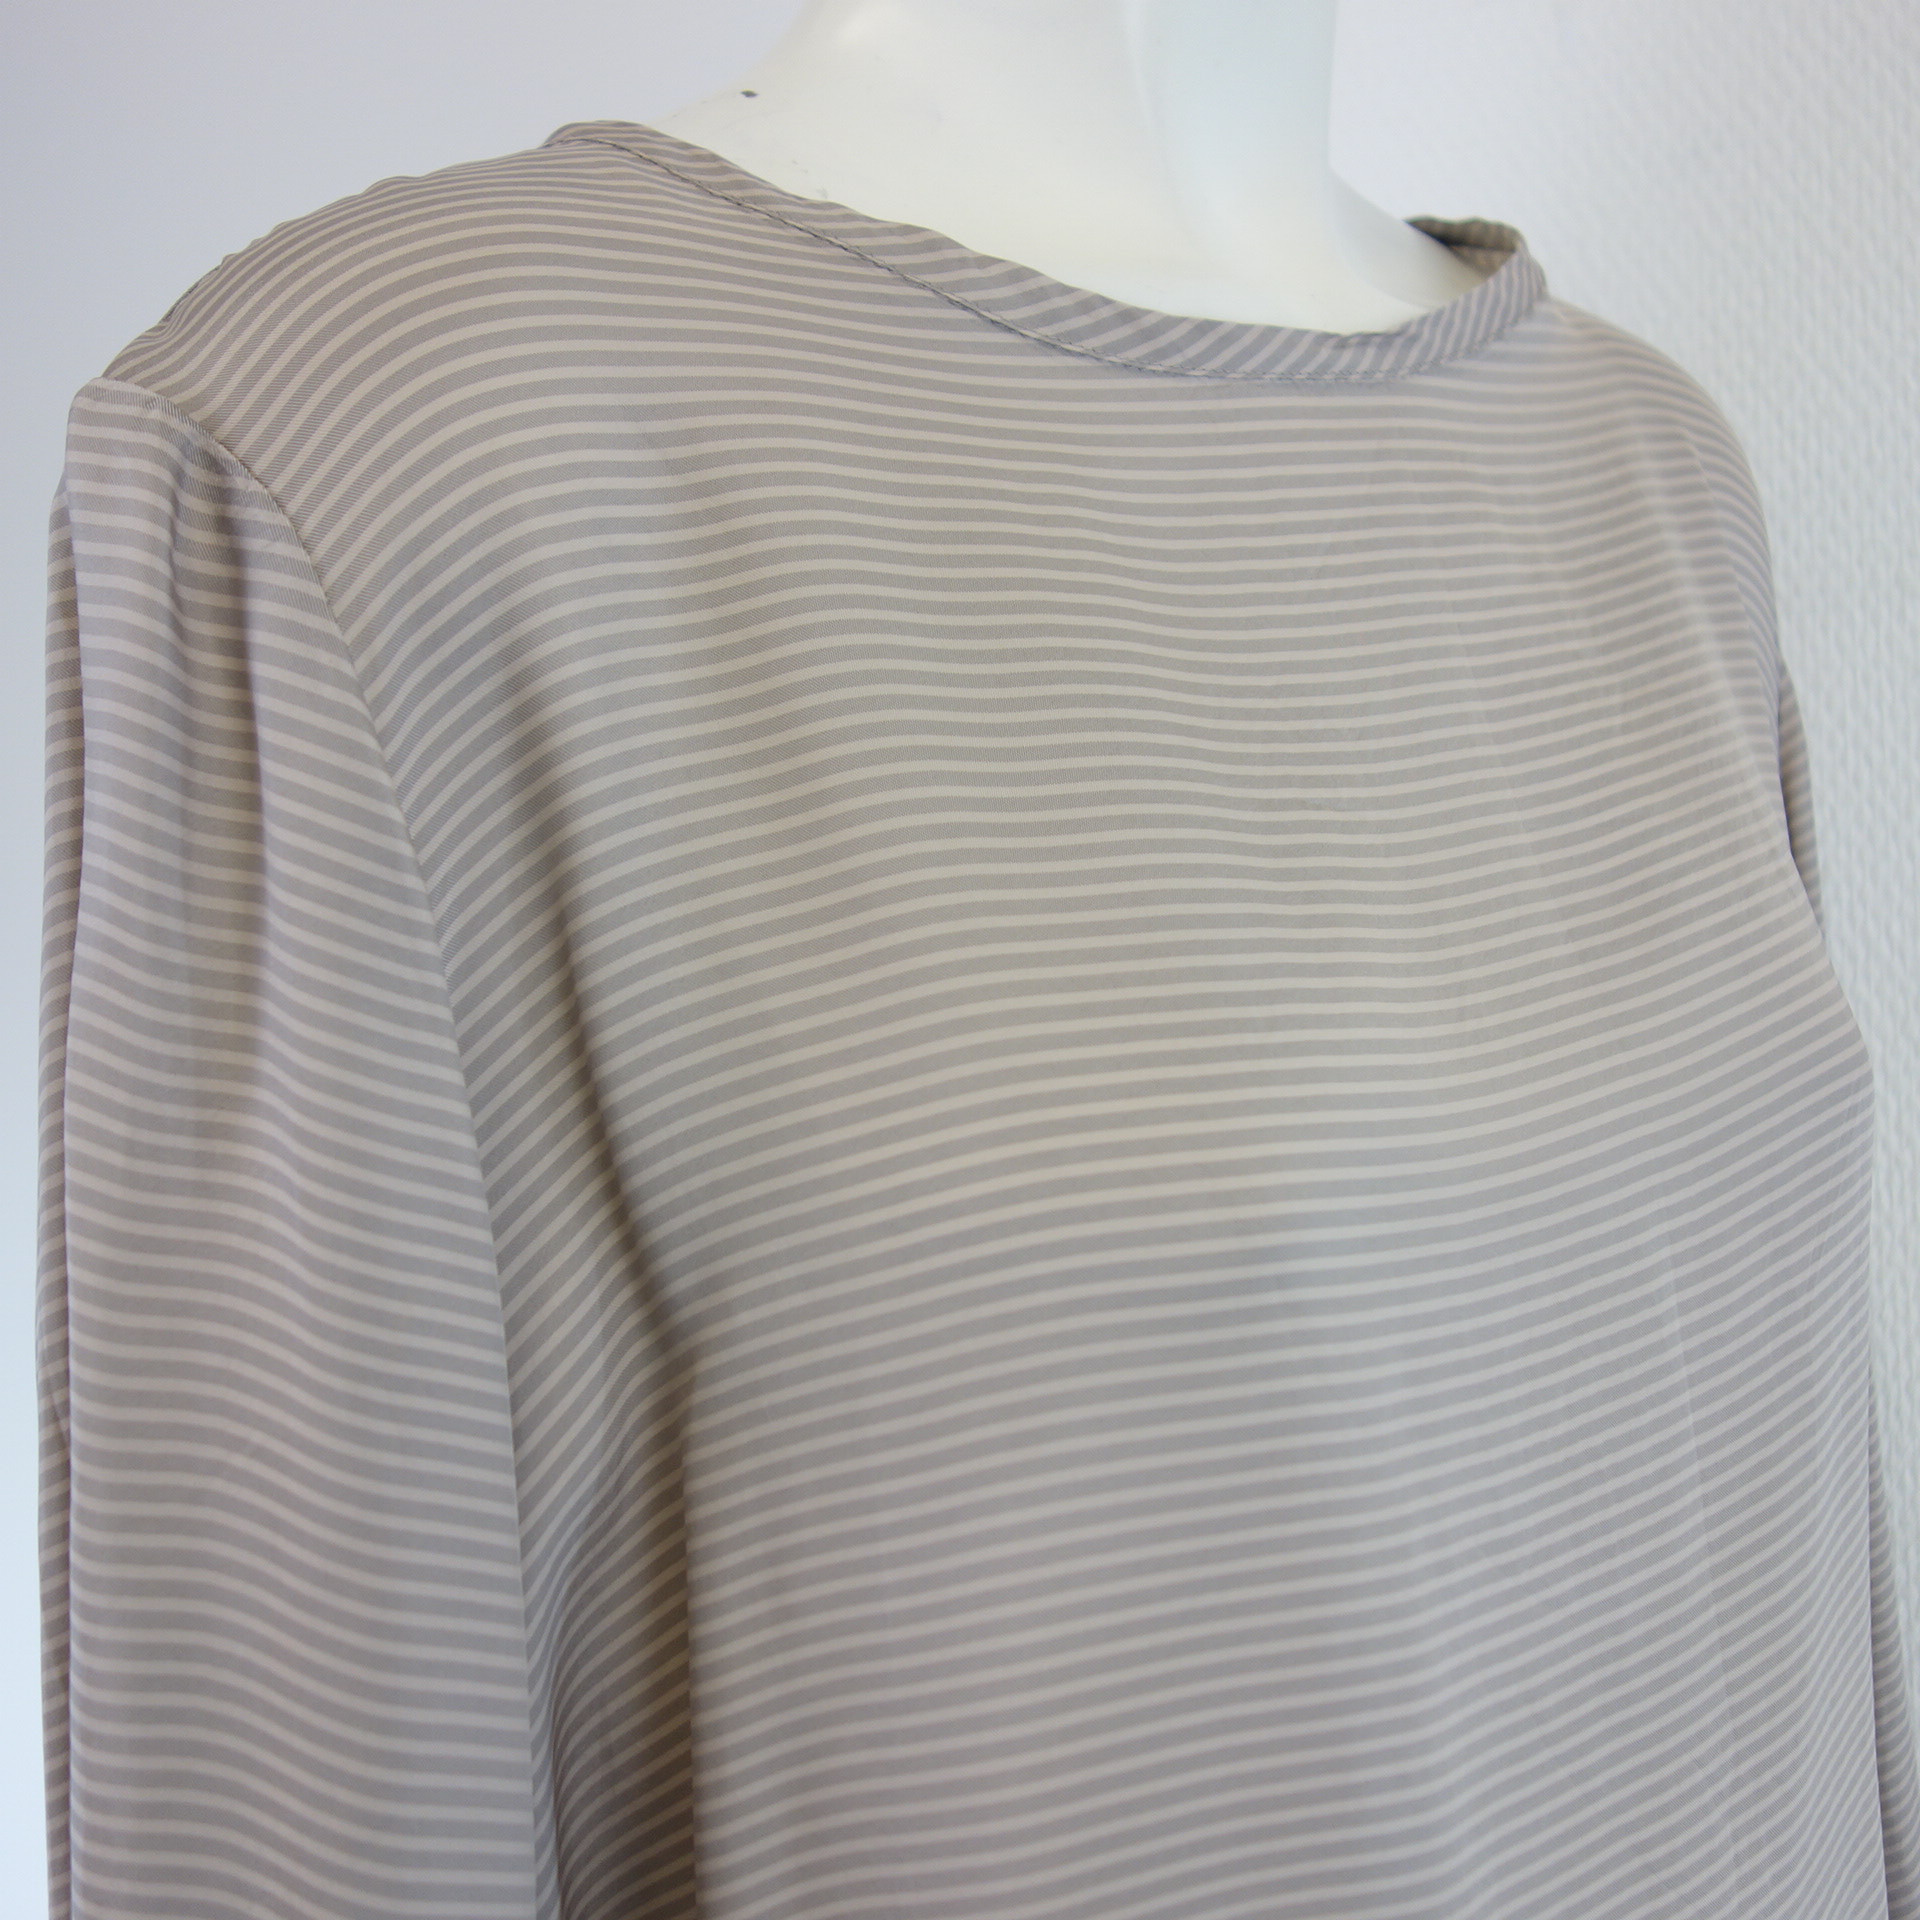 HUMANOID Damen Shirt Bluse Tunika Gestreift Beige Taupe M - L Modell EMMET